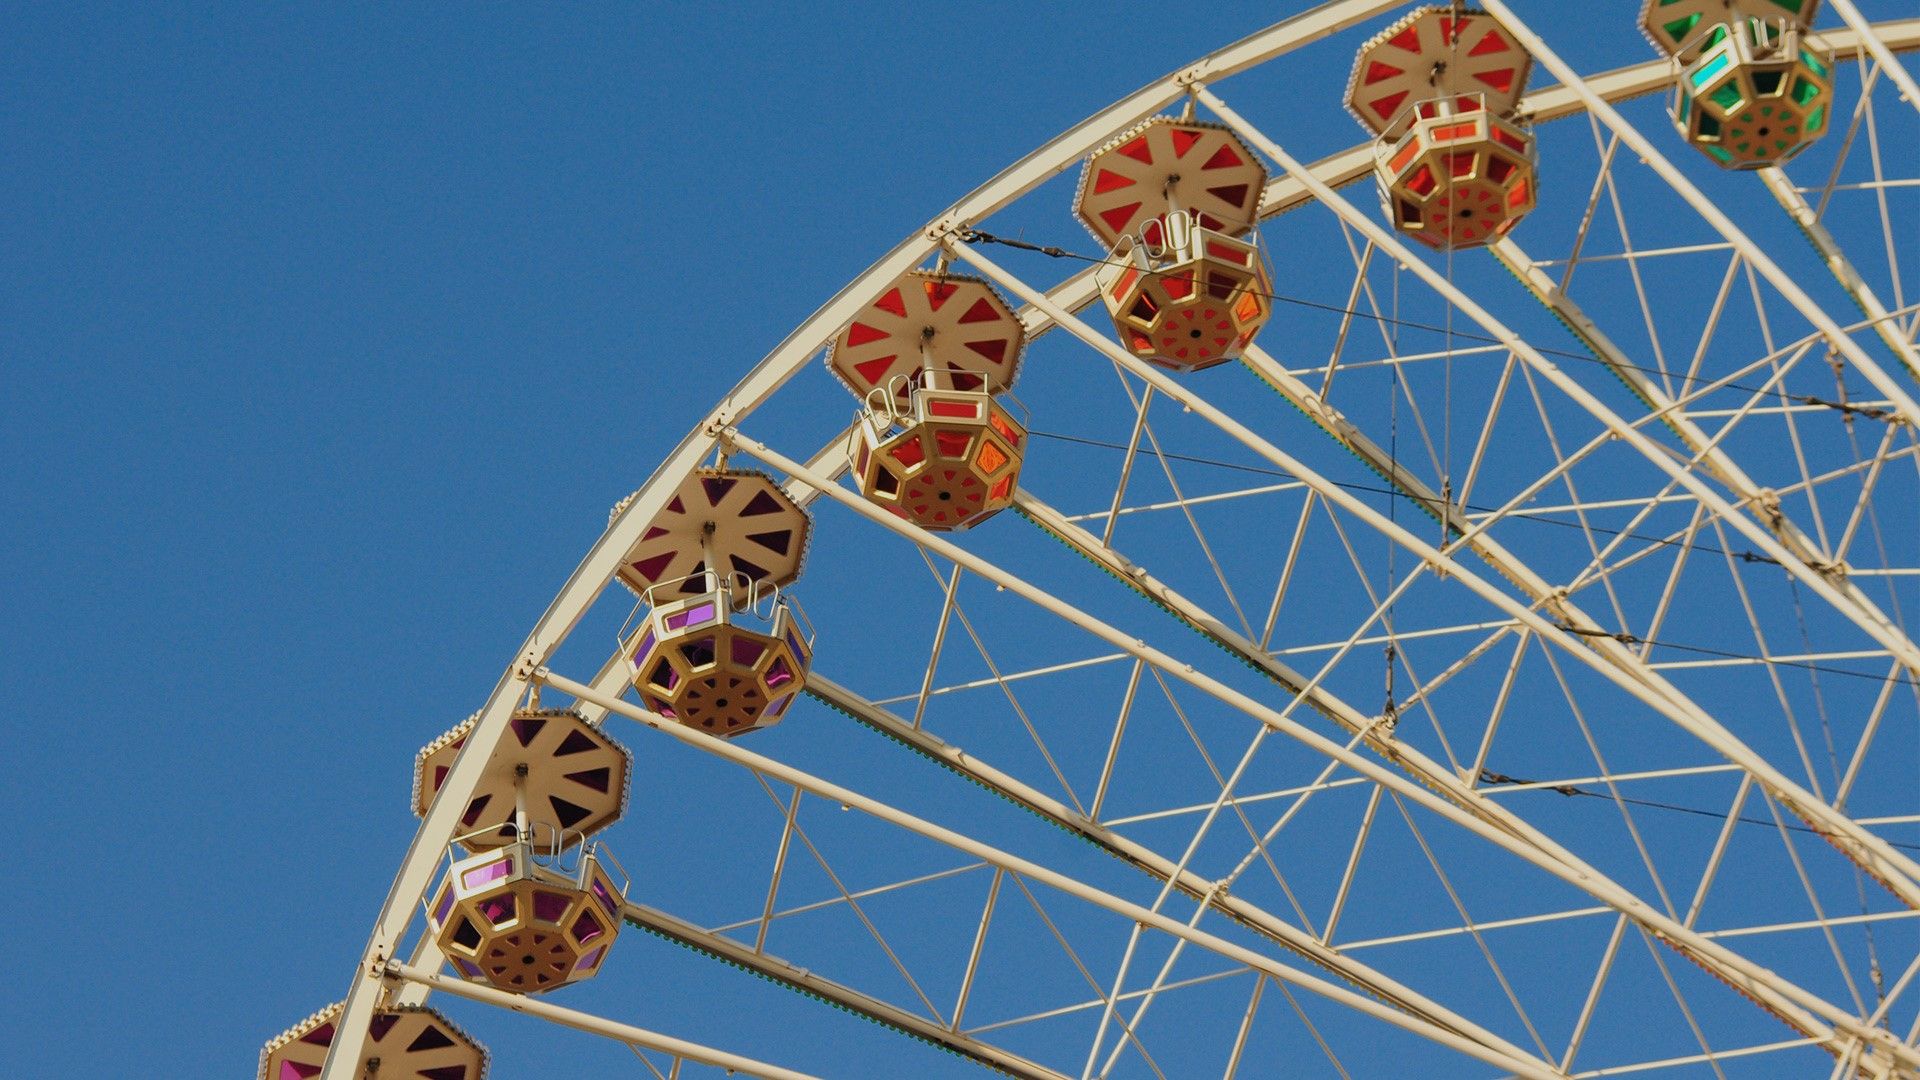 Vintage colorful ferris wheel against a sunny blue sky, retro fun at a summer fair or a carnival. Windows 10 Spotlight Image